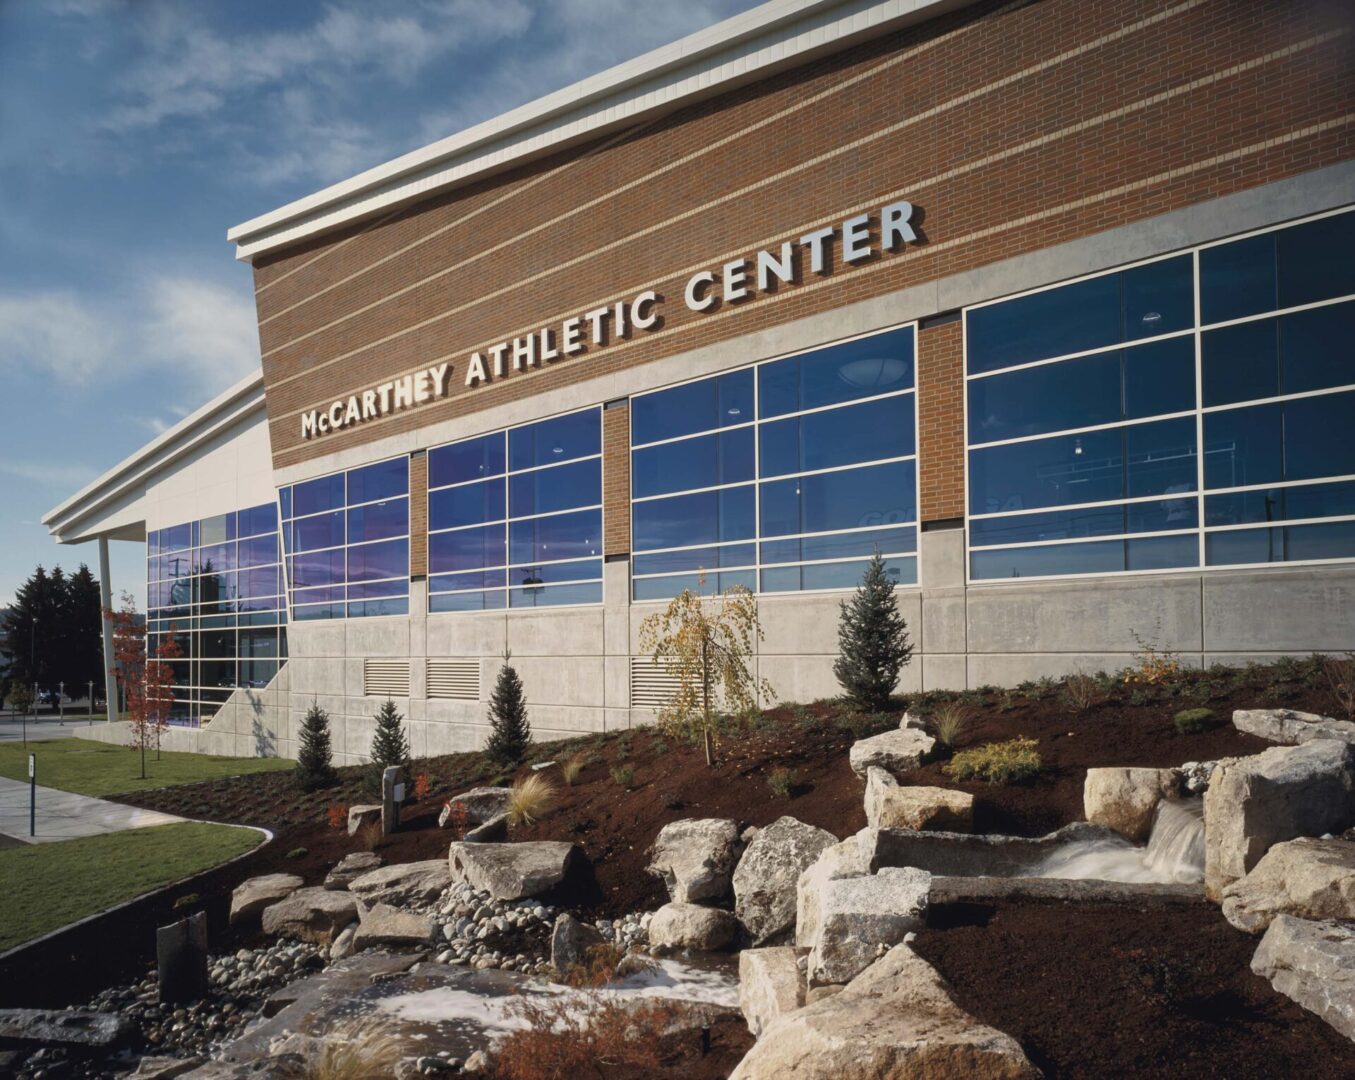 McCarthey Athletic Center